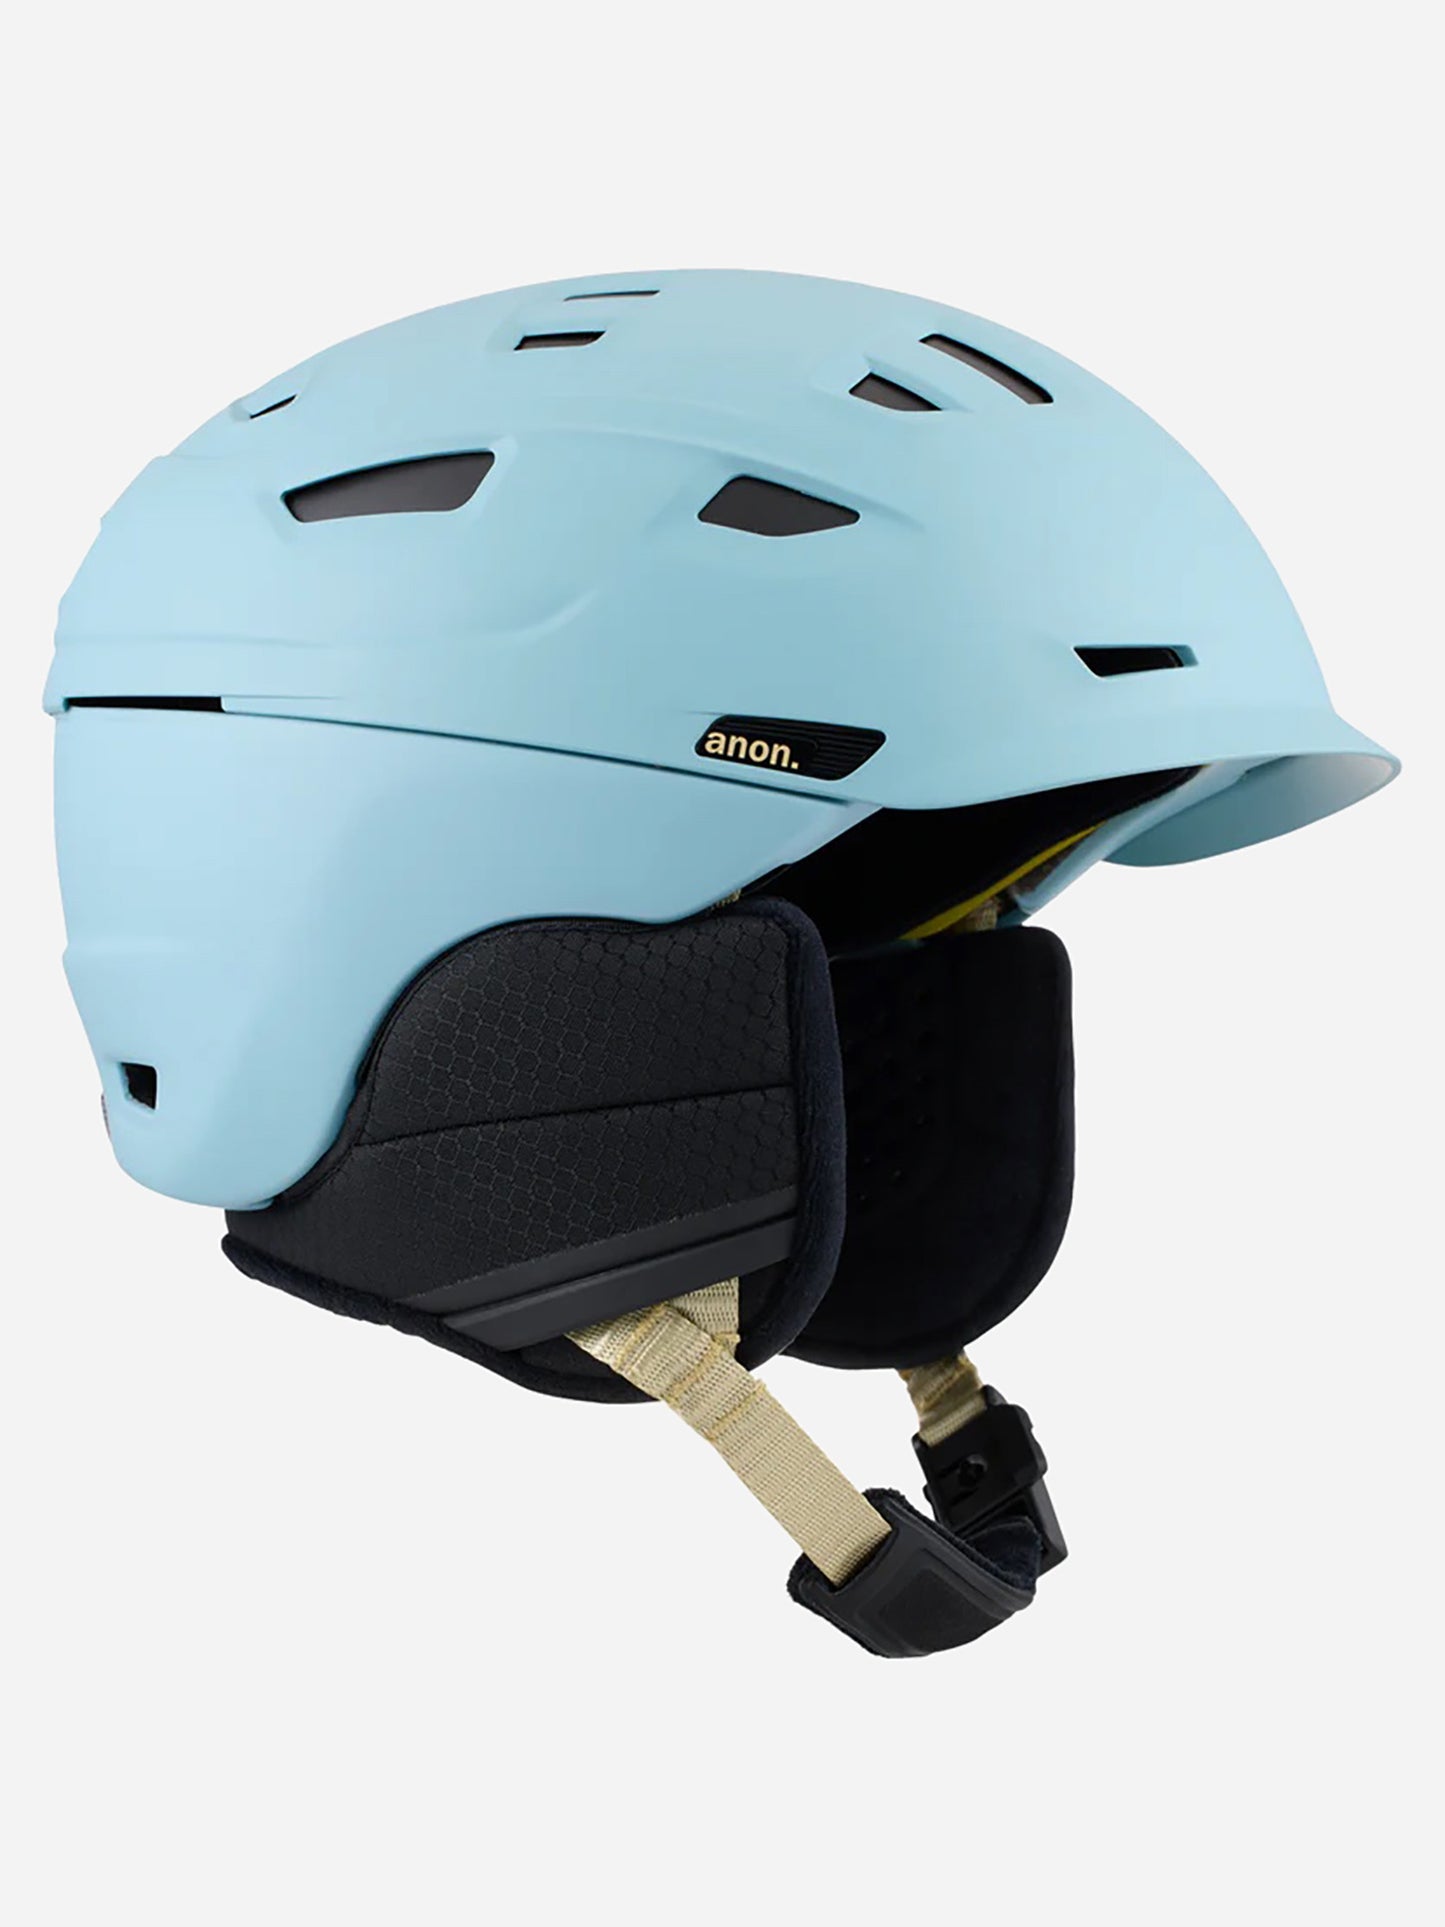 Anon Prime MIPS Ski And Snowboard Helmet